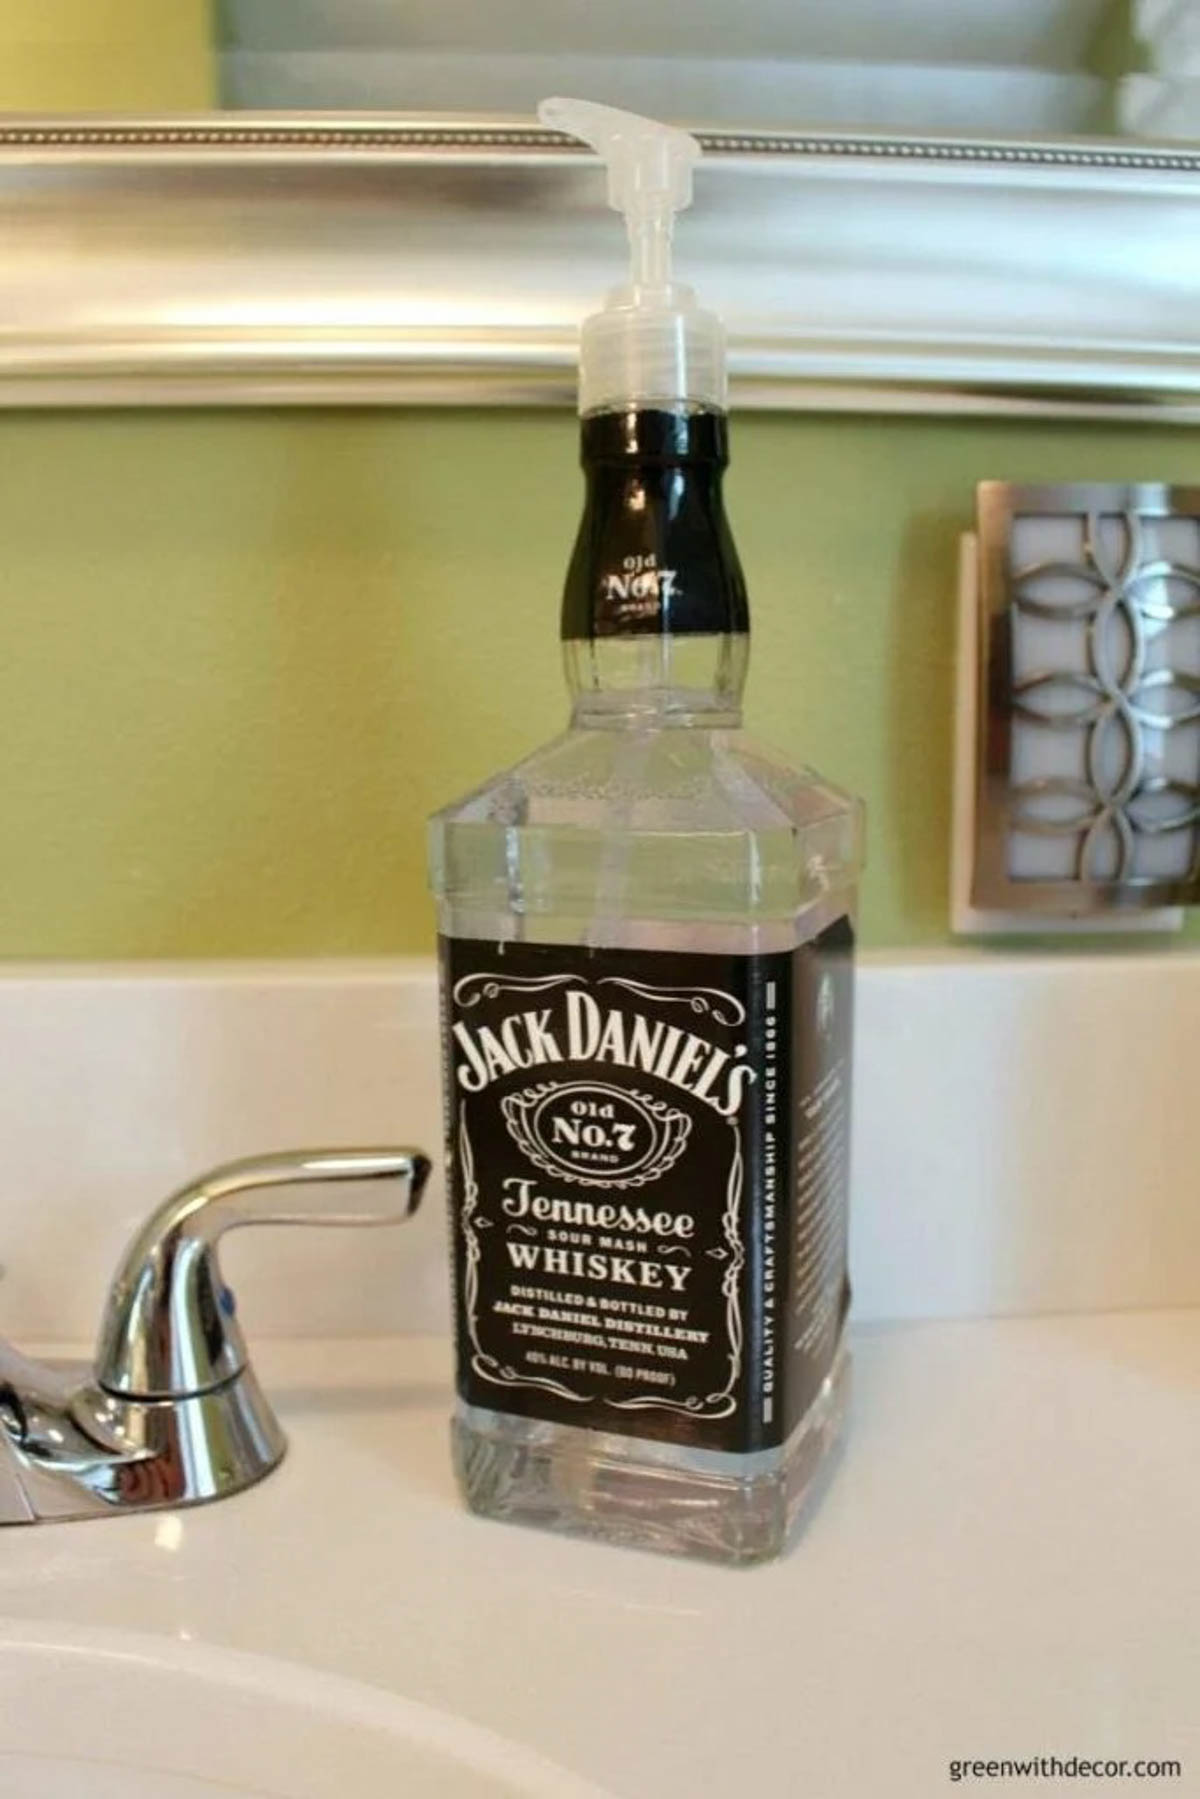 soap dispenser from Jack Daniels bottle